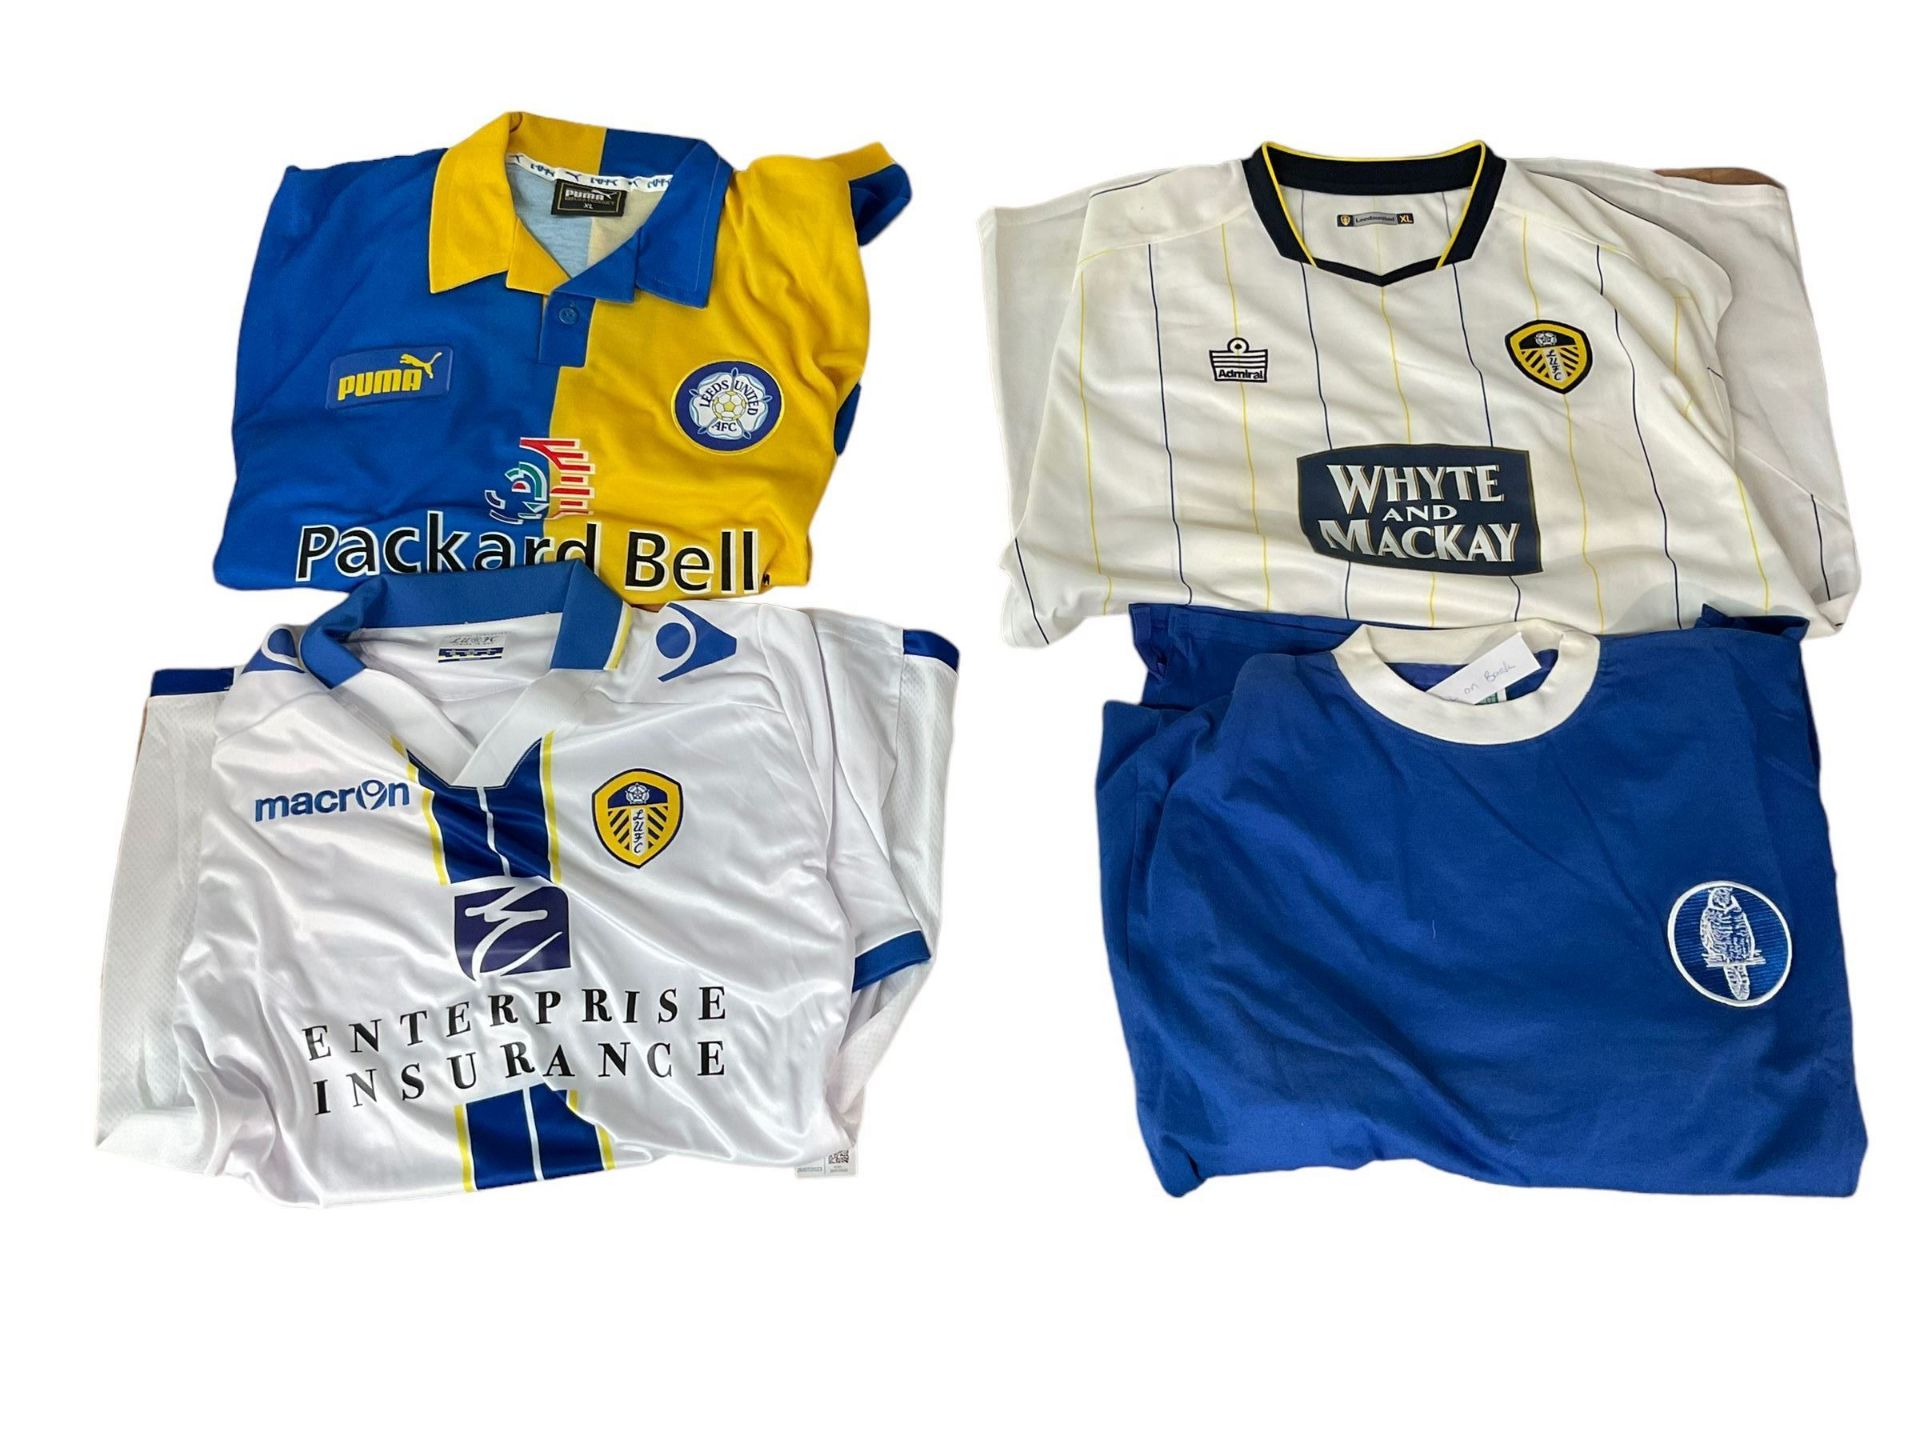 Leeds United football club - twenty-three replica shirts including 1970s 'Arkwright' - Image 3 of 7